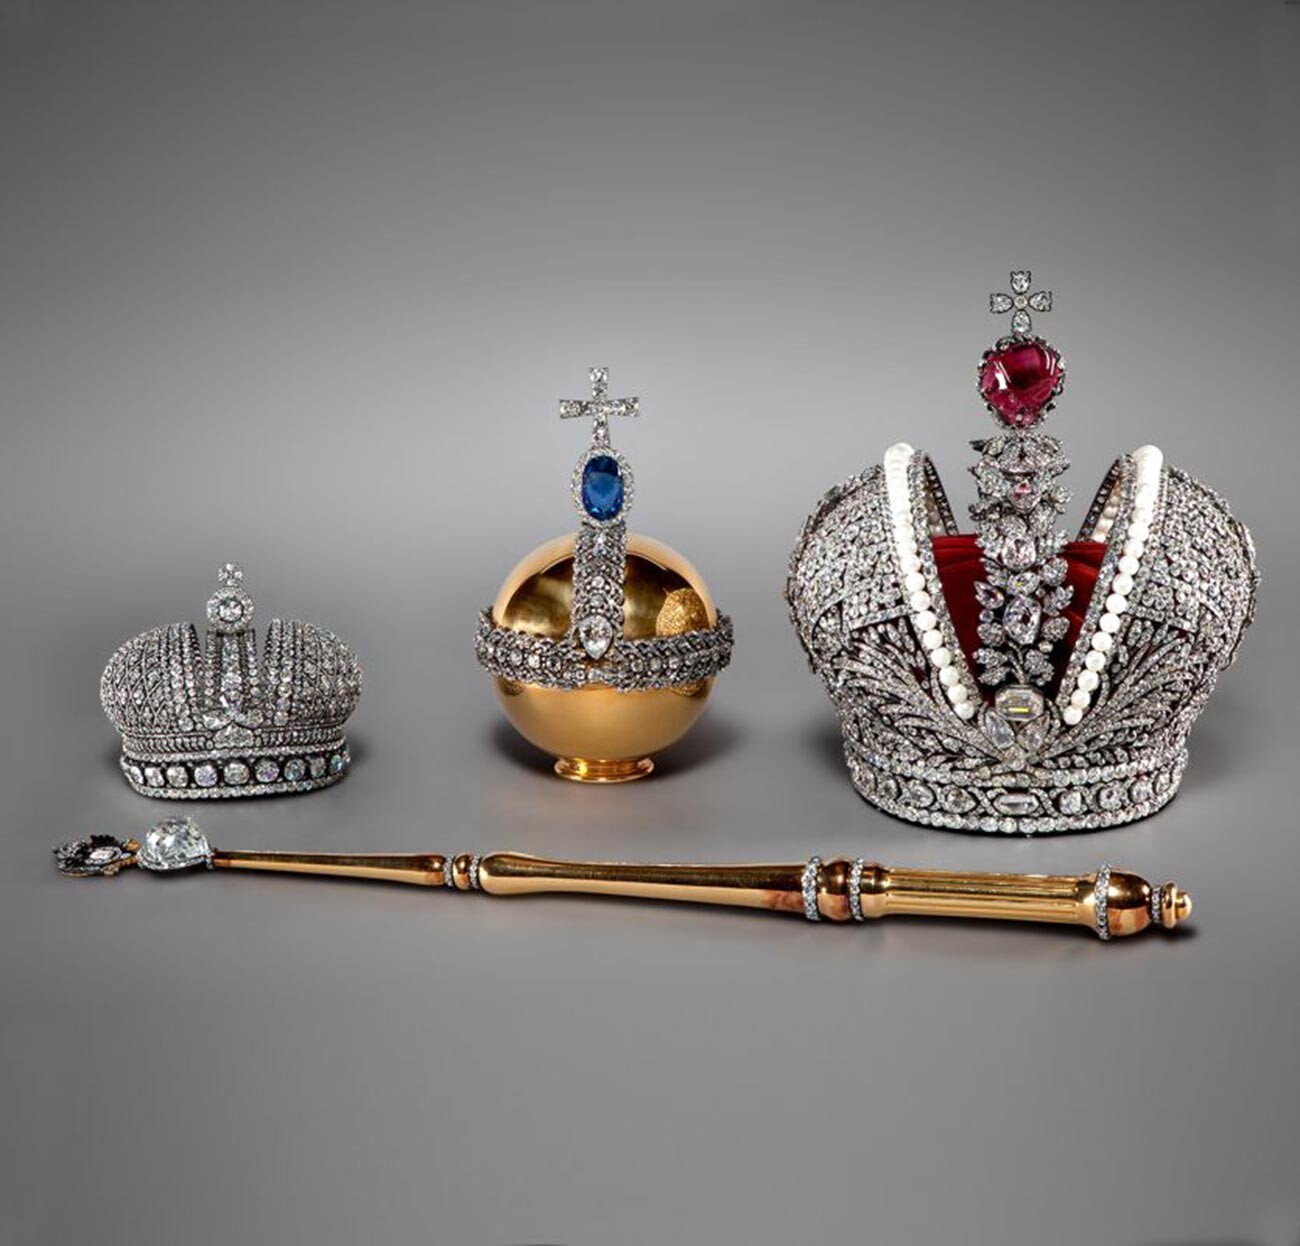 Coronation regalia of Russian tsars